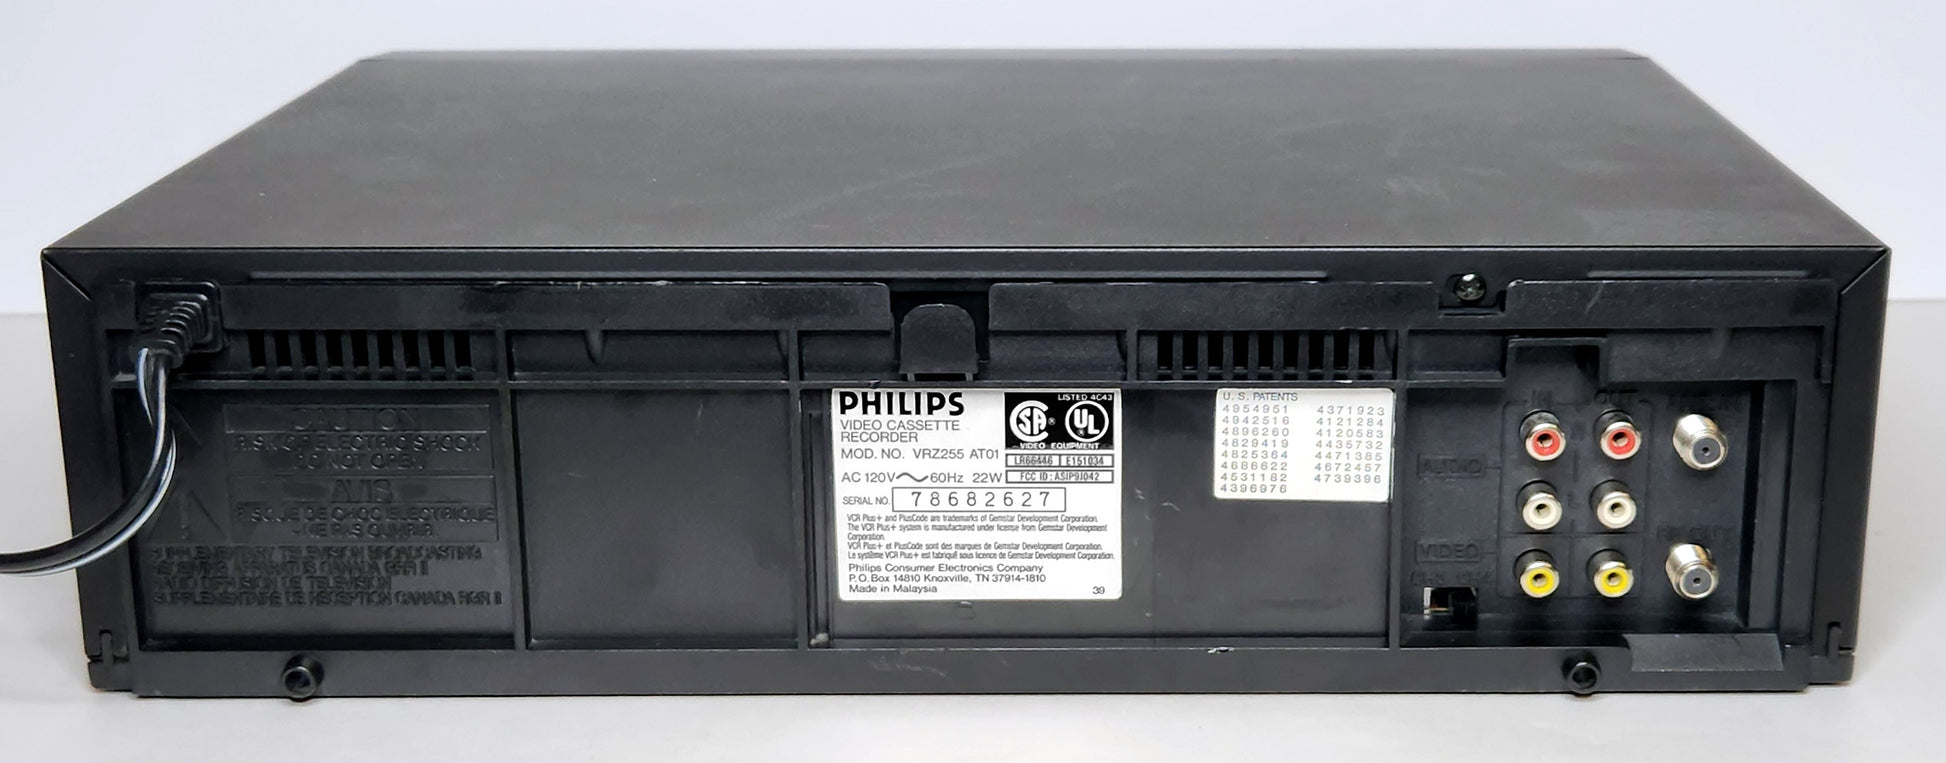 Philips Magnavox VRZ255 VCR, 4-Head Hi-Fi Stereo - Rear